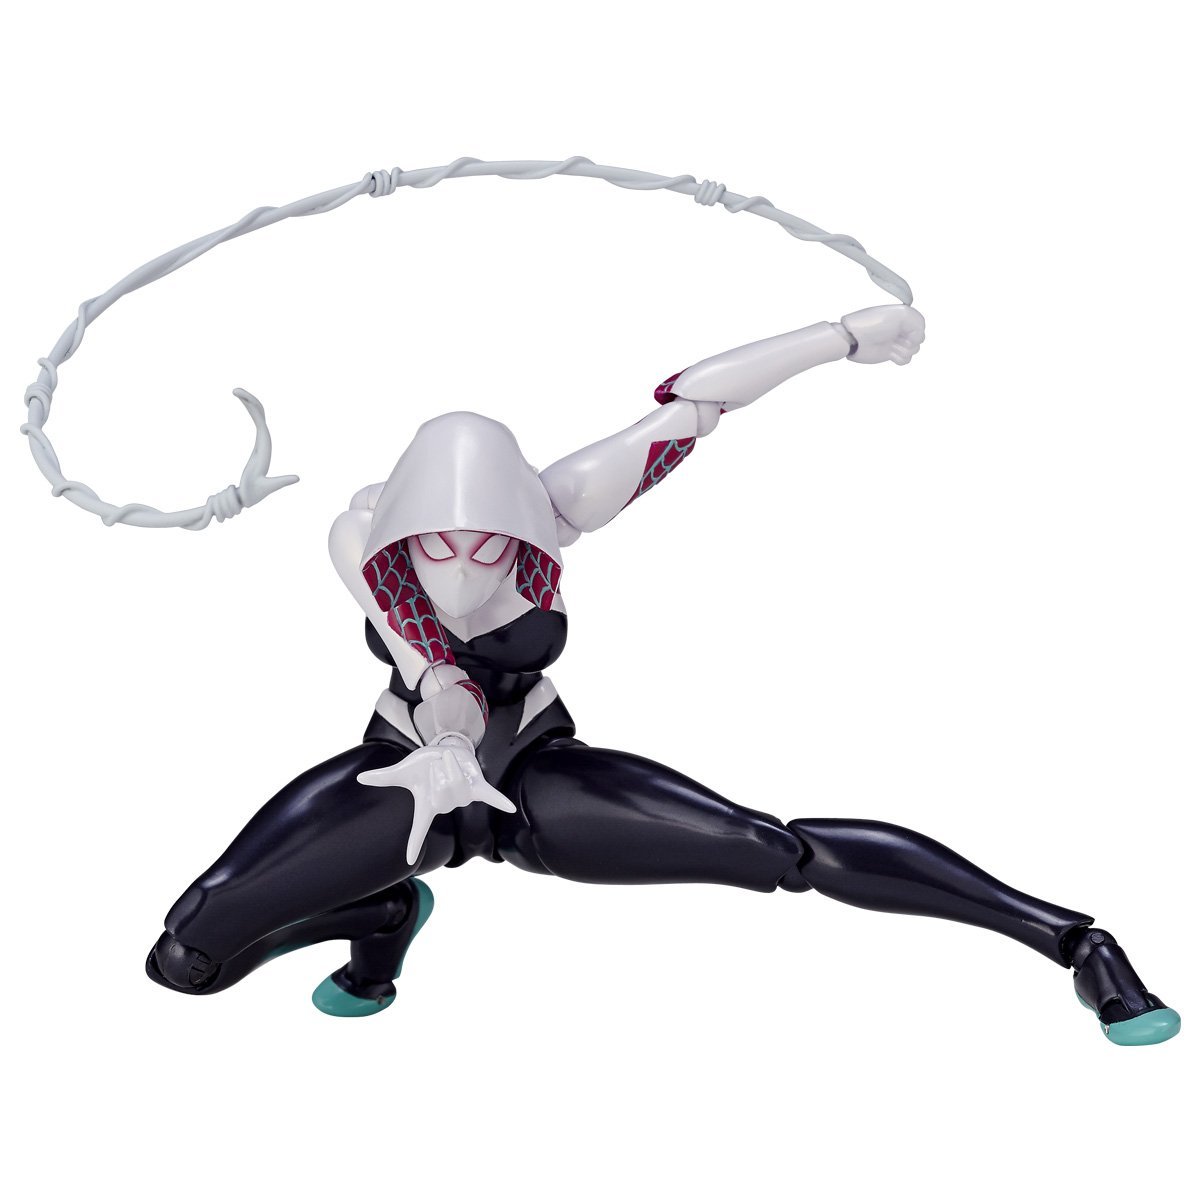 Unboxing/Review: Amazing Yamaguchi Spider-Gwen Revoltech action figure